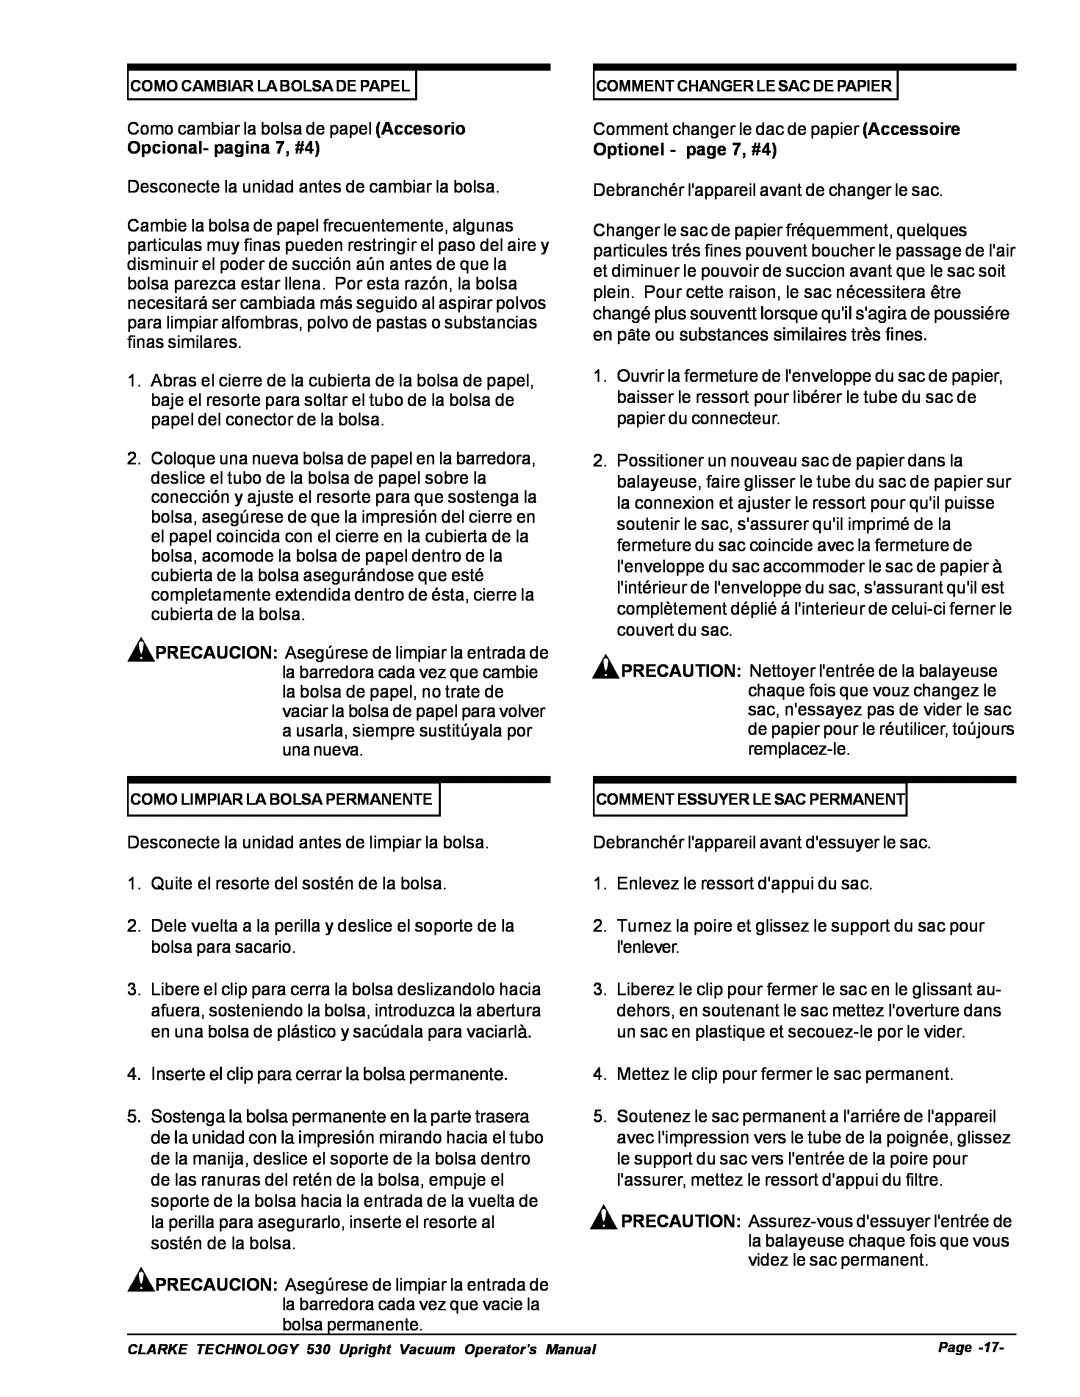 Nilfisk-ALTO 530cc manual Opcional- pagina 7, #4, Optionel - page 7, #4 